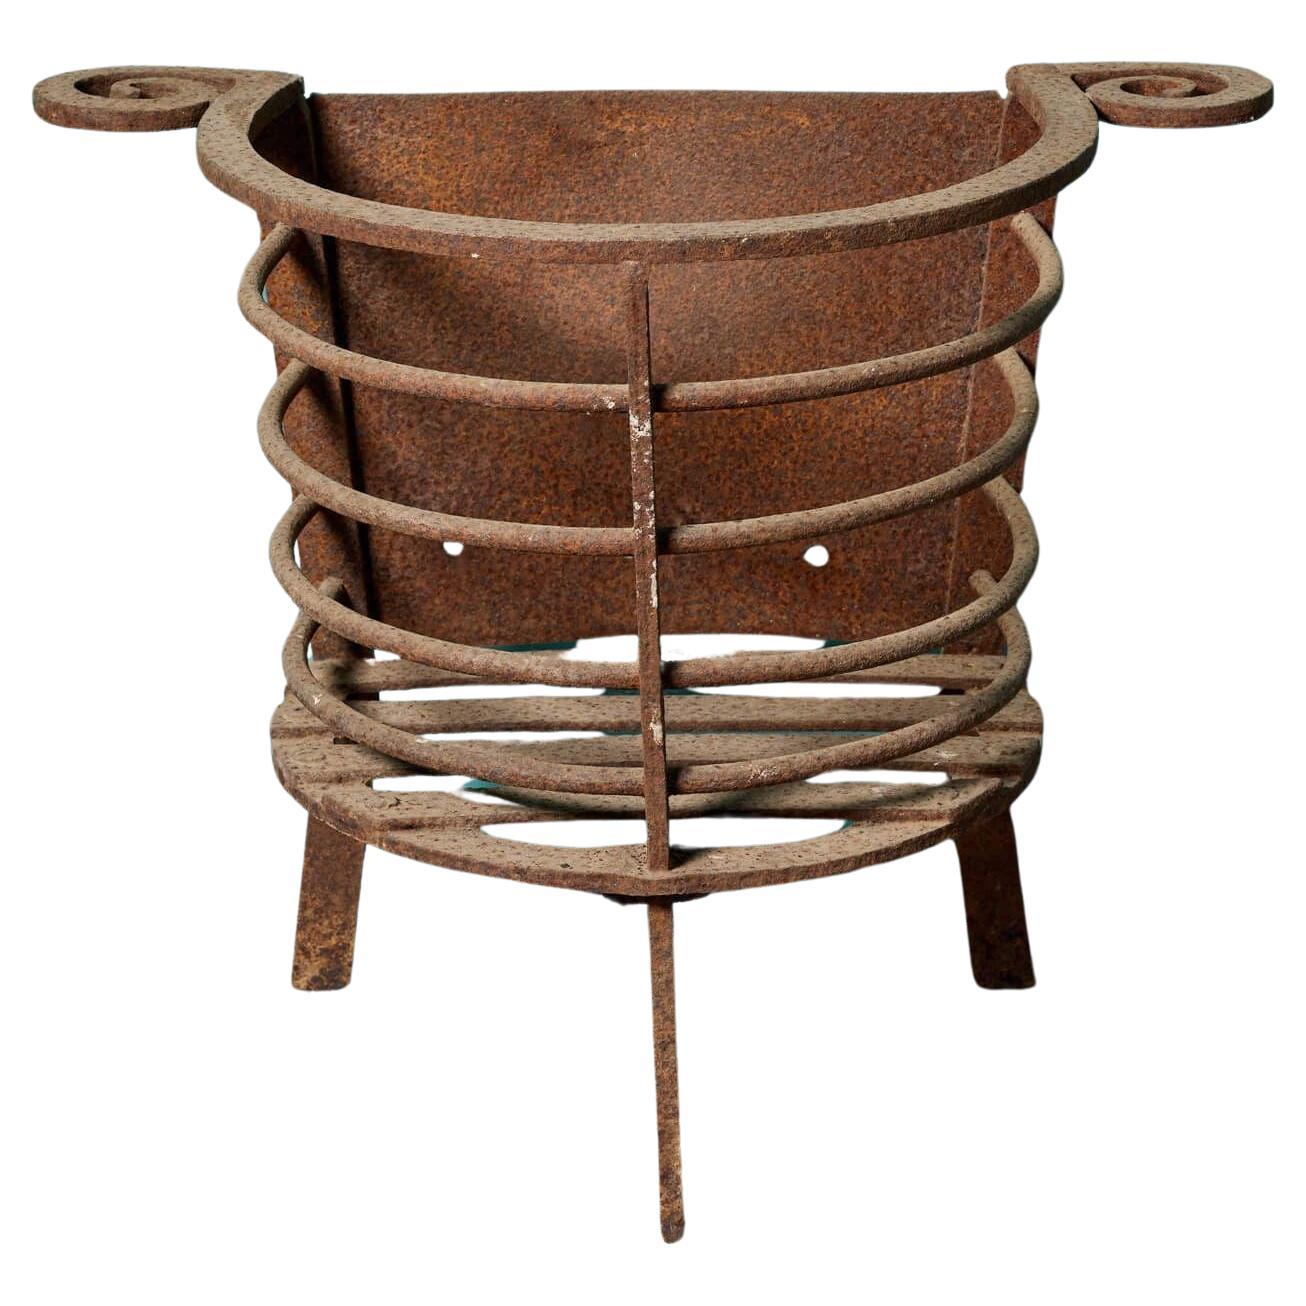 Antique Wrought Iron Fire Basket